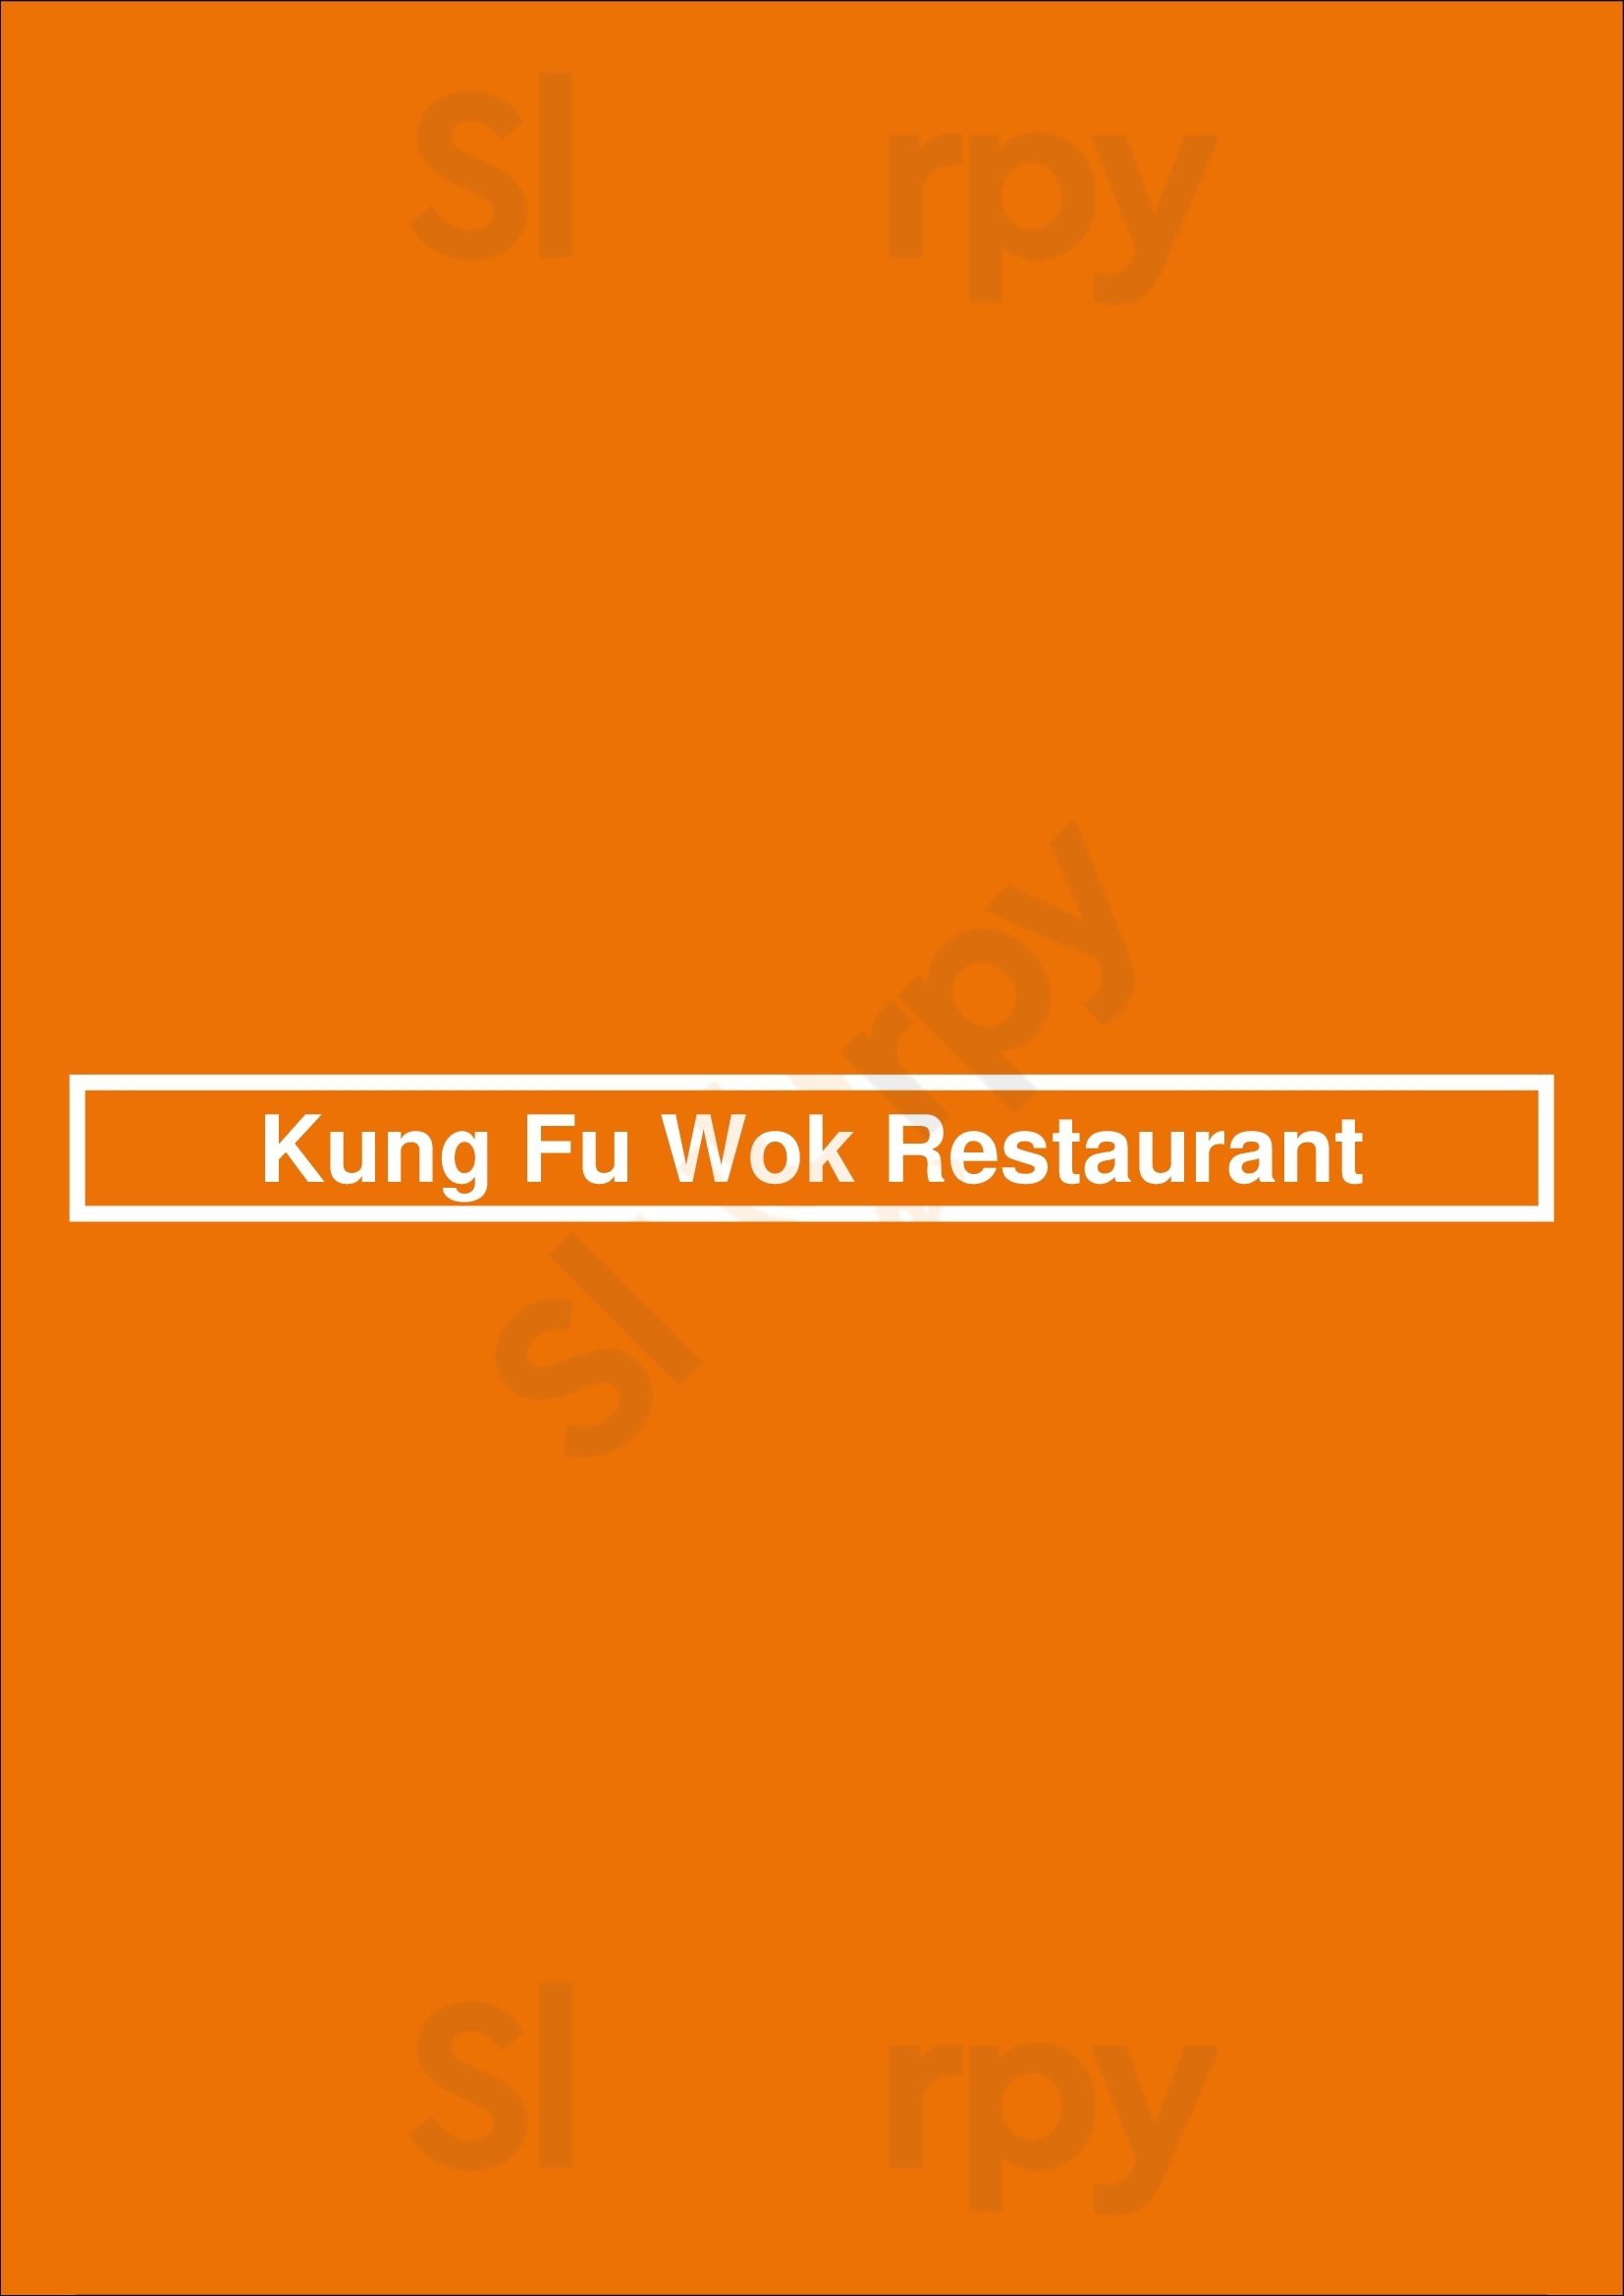 Kung Fu Wok Restaurant Chicago Menu - 1